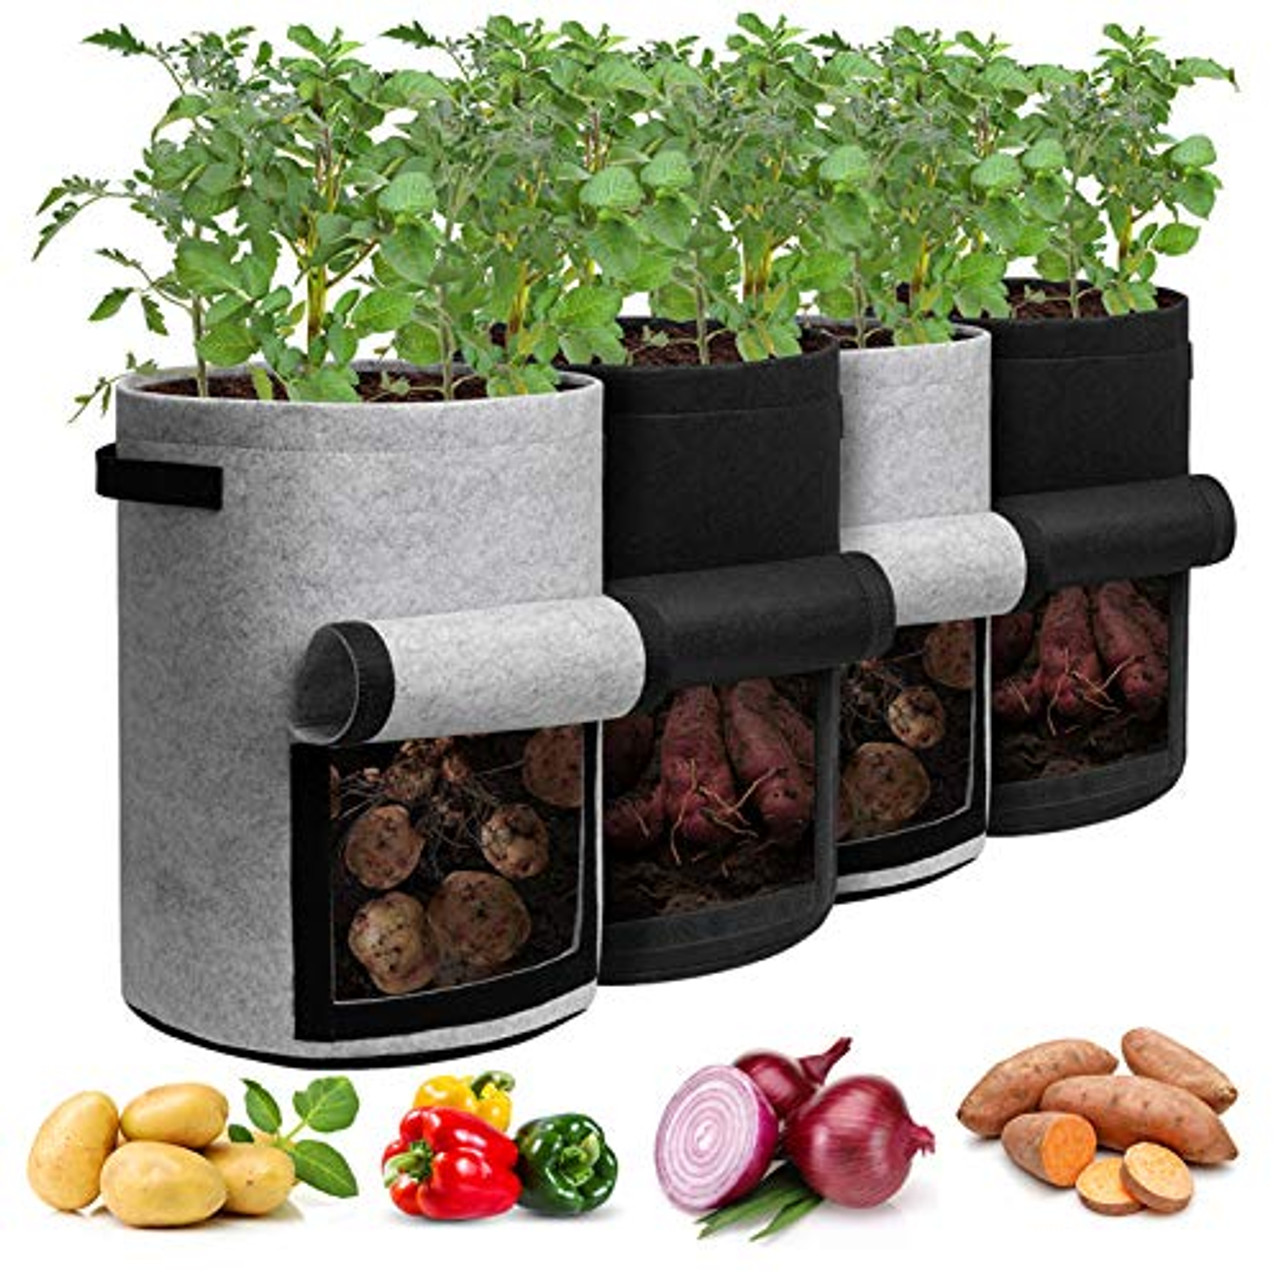 HDPE 24X36 Grow Bag for Home Gardening Extra Thick Premium Quality Gro